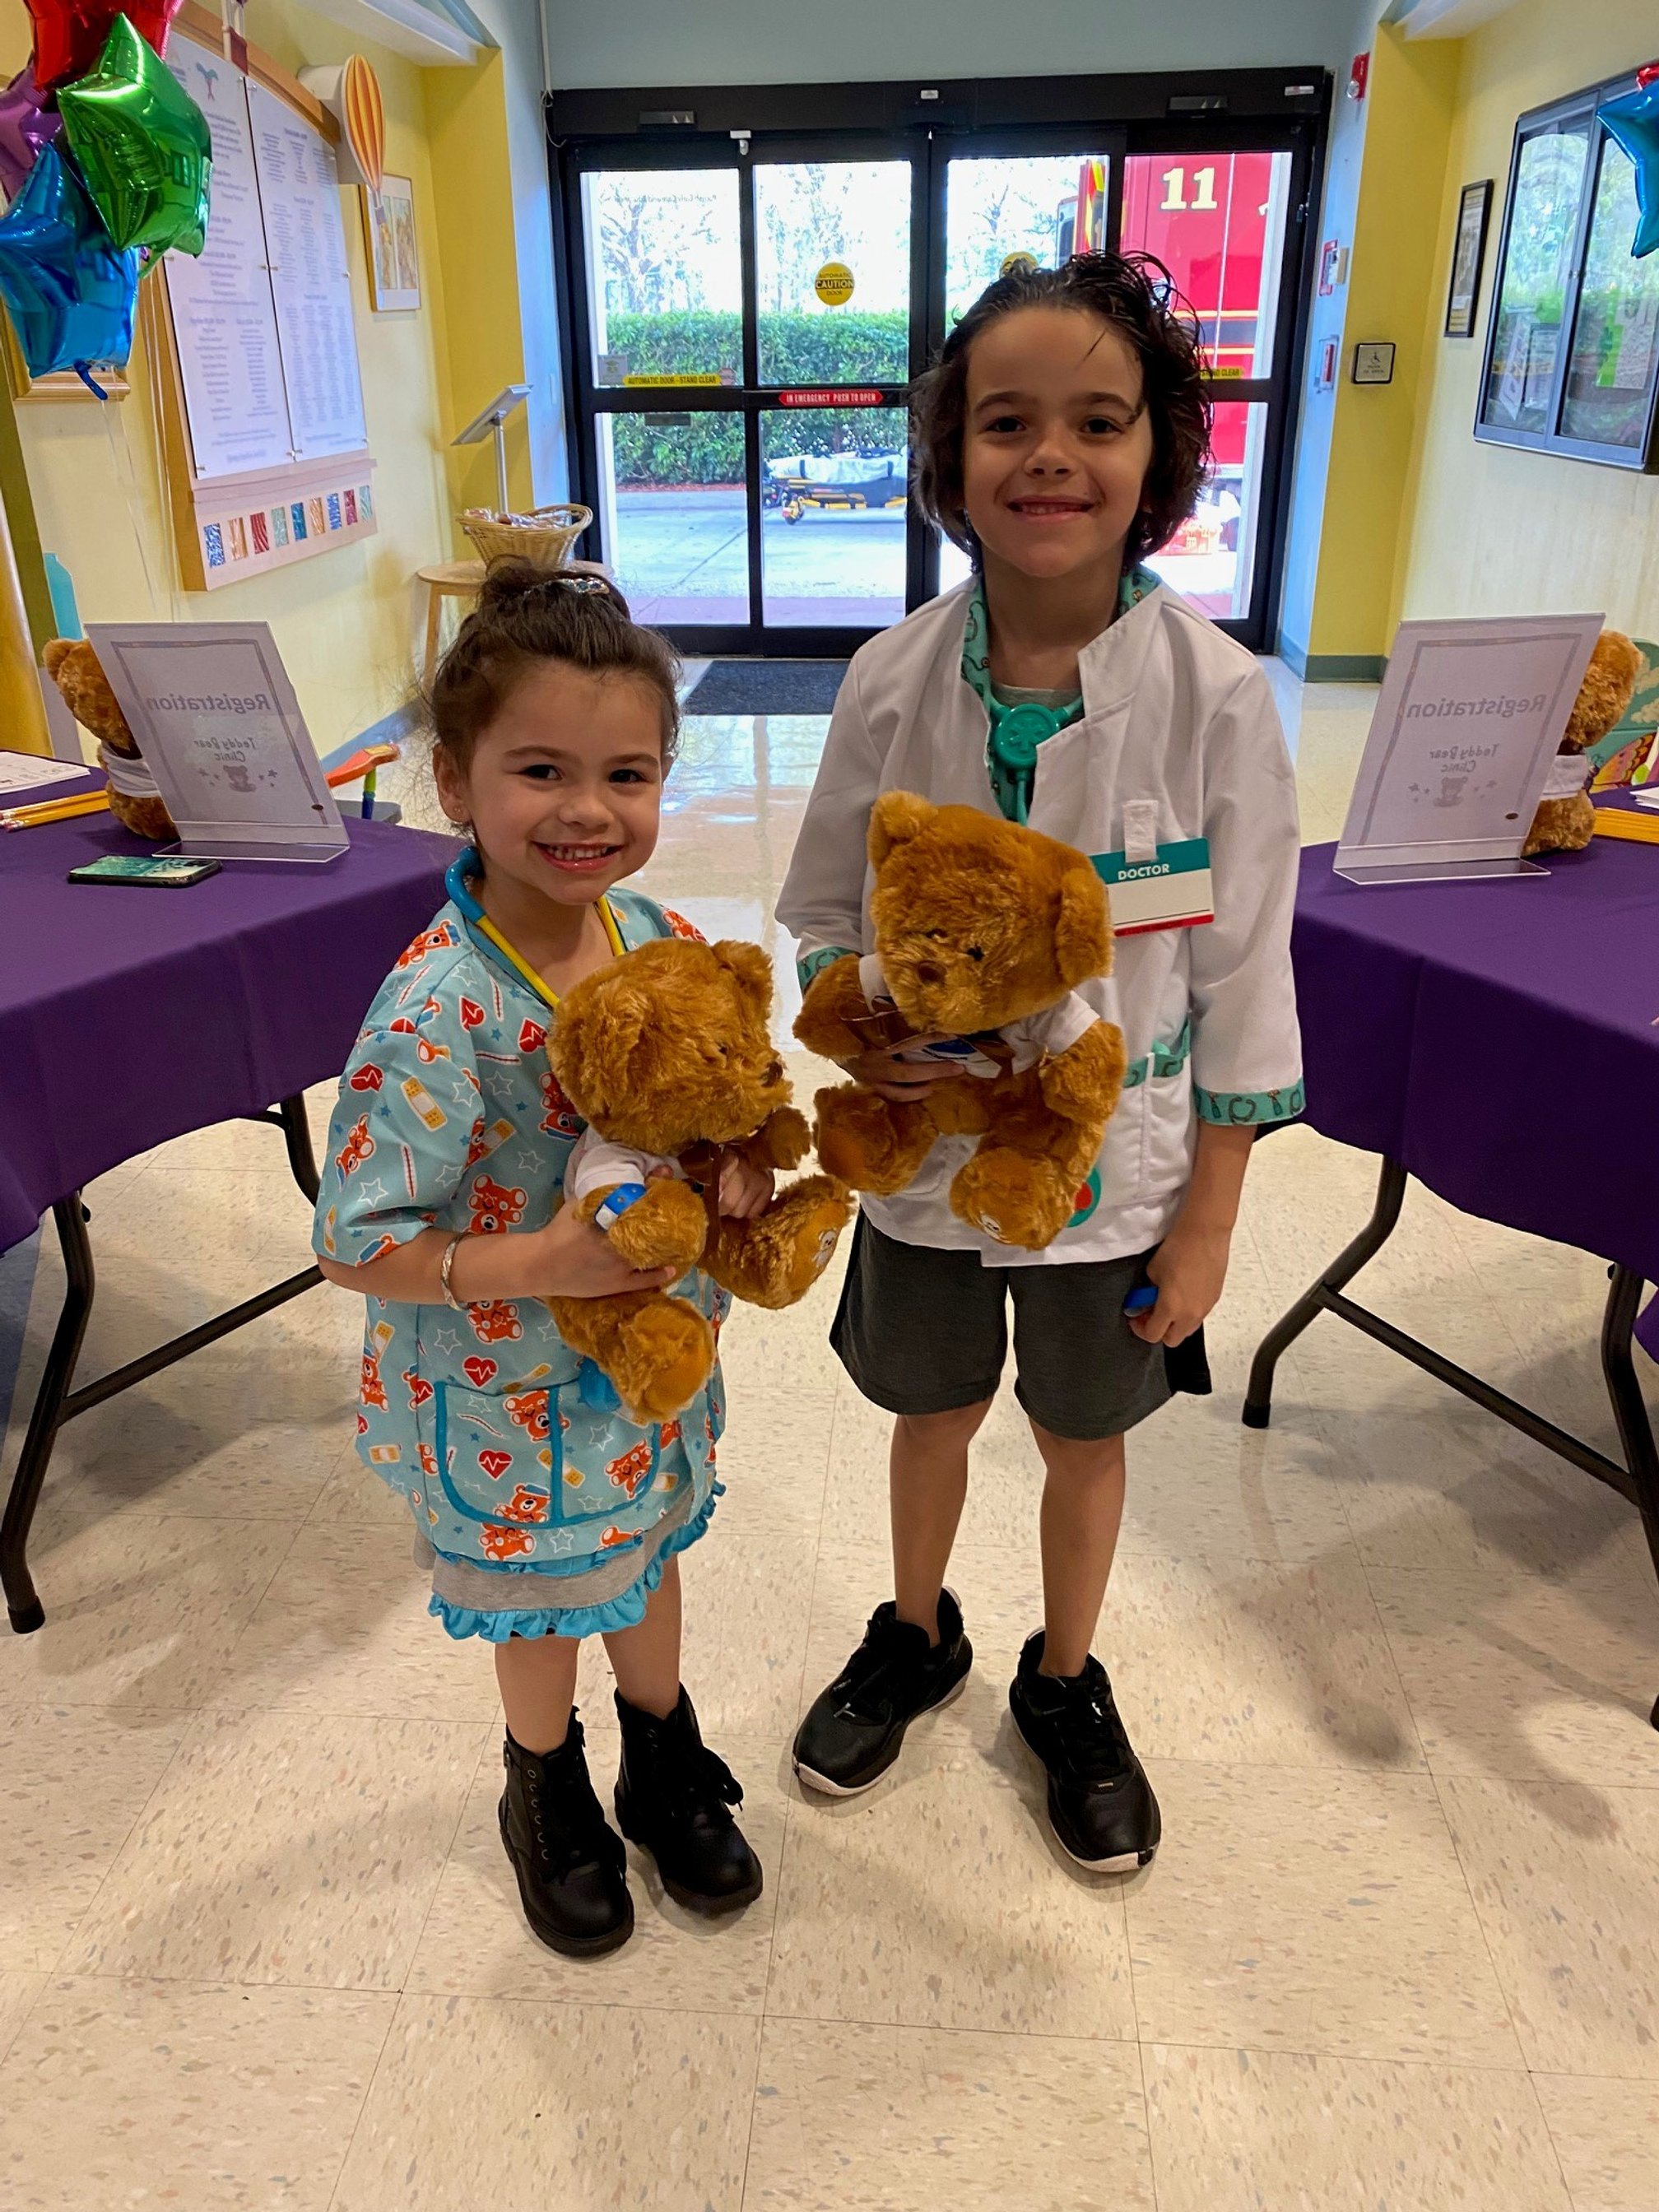 Teddy Bear Clinic at the Children's Center in Titusville, FL